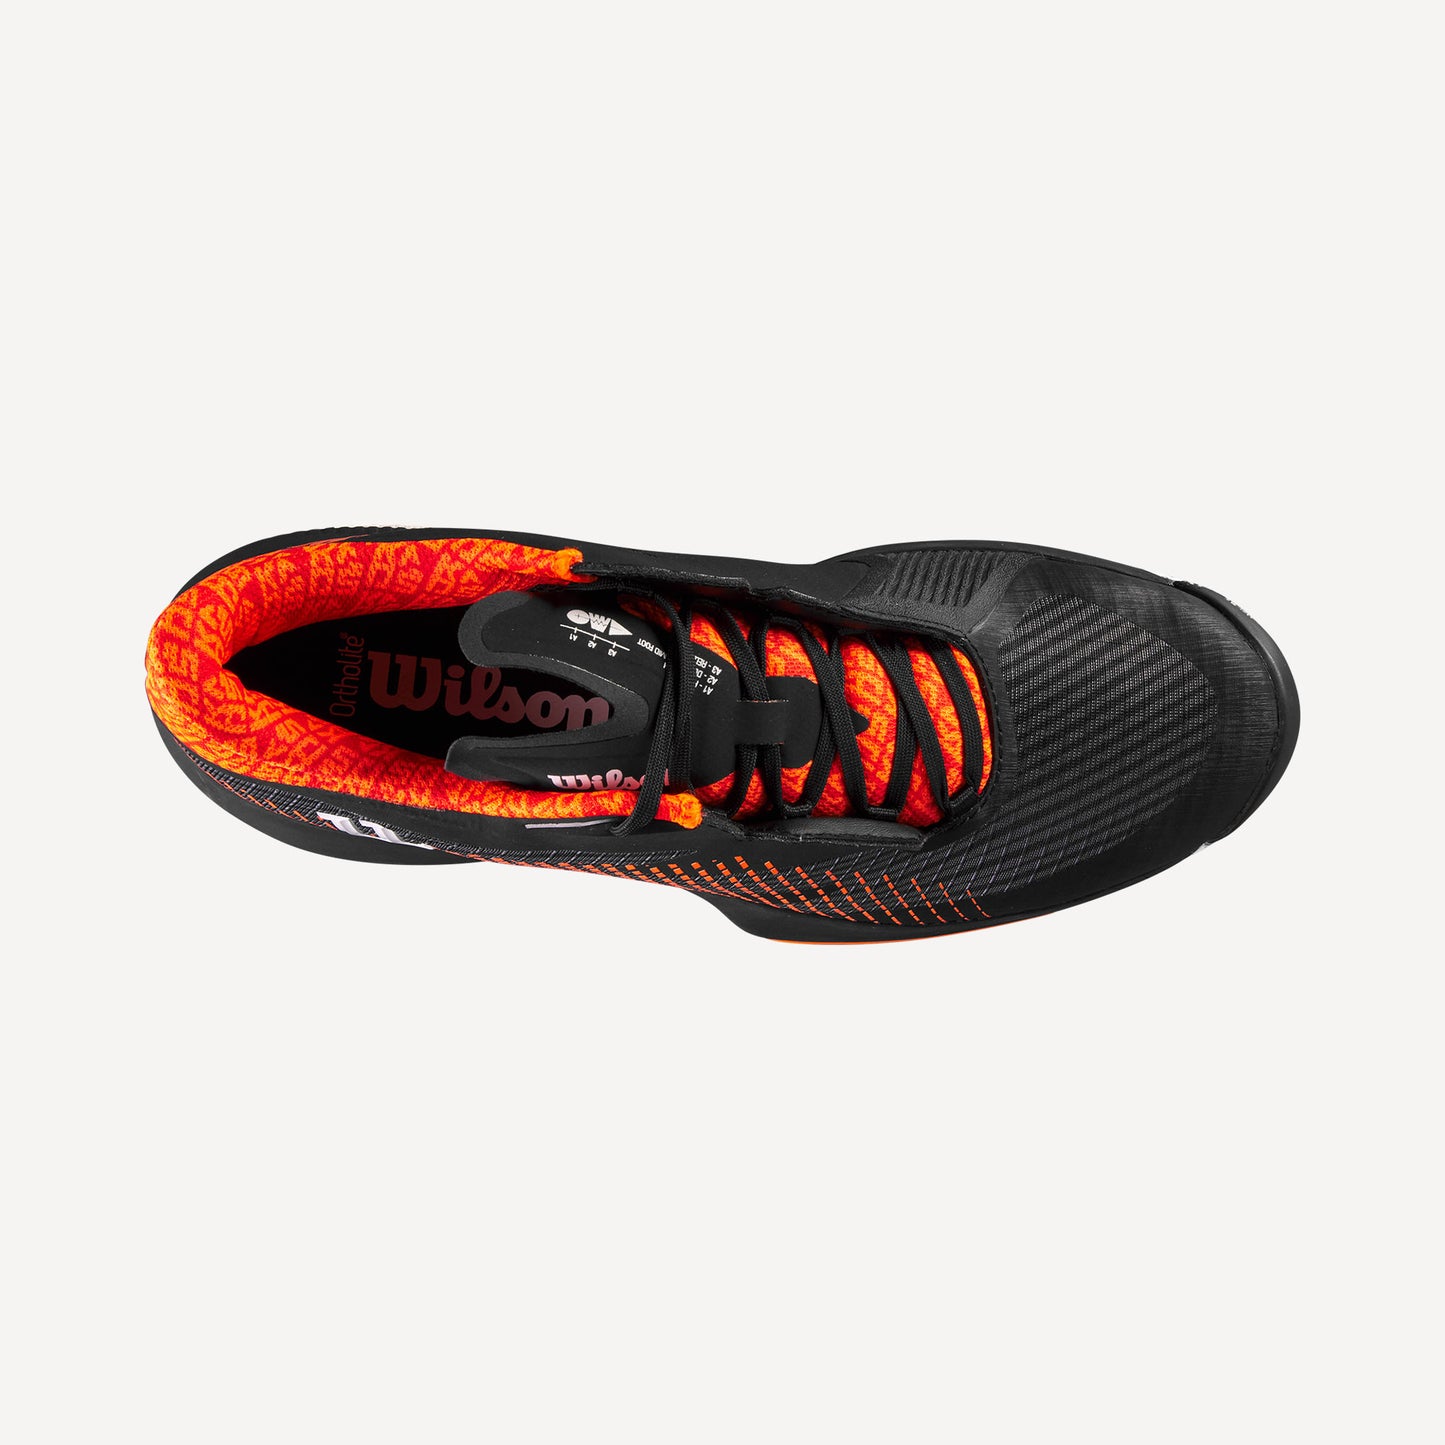 Wilson KAOS Swift 1.5 Men's Clay Court Tennis Shoes Black (6)